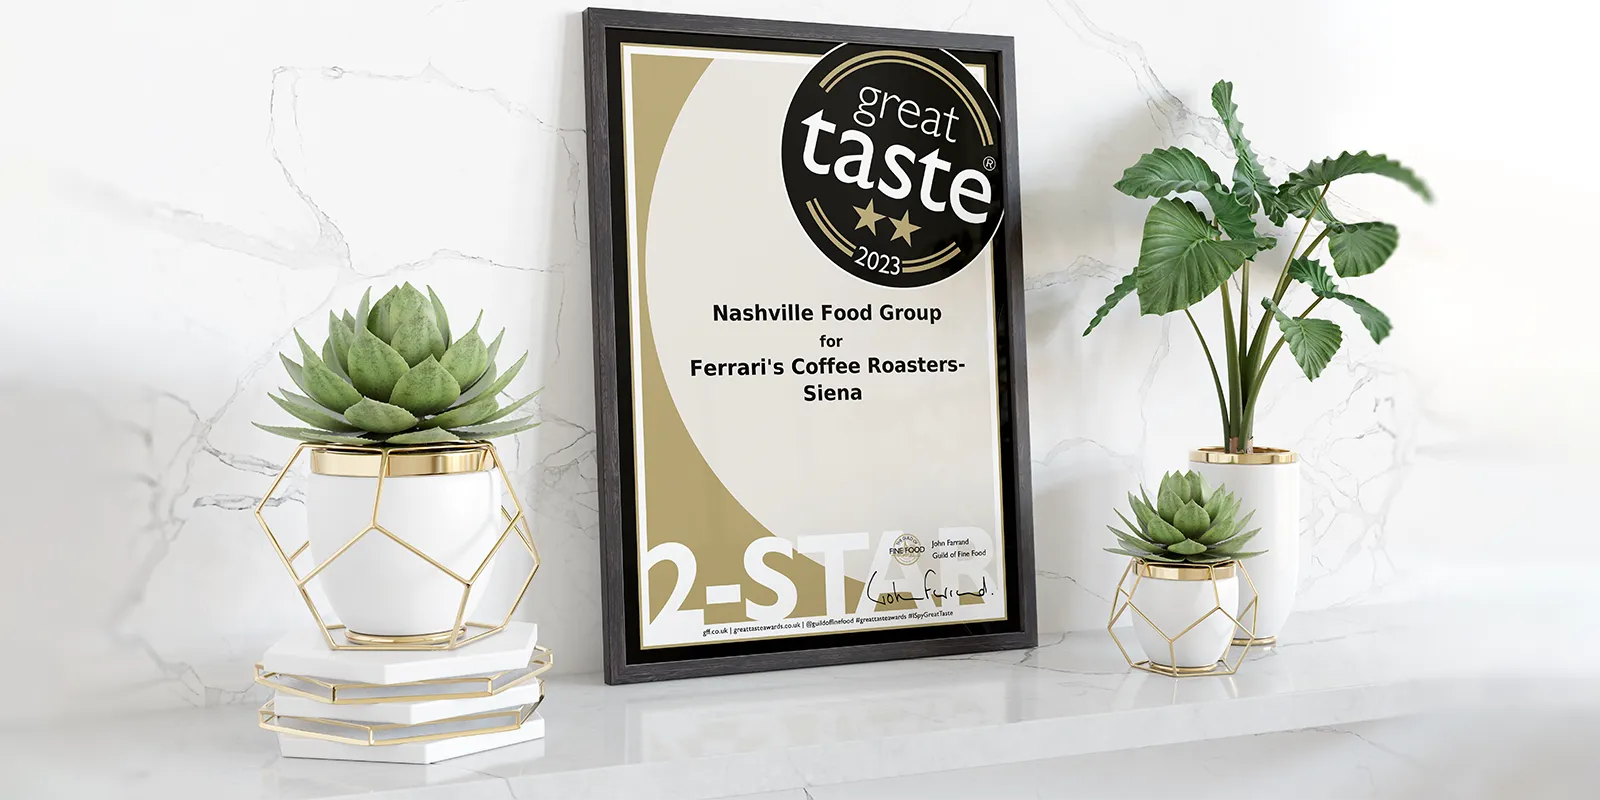 Award Winning Coffee: Great Taste Award 2023, Siena, 2-star certificate